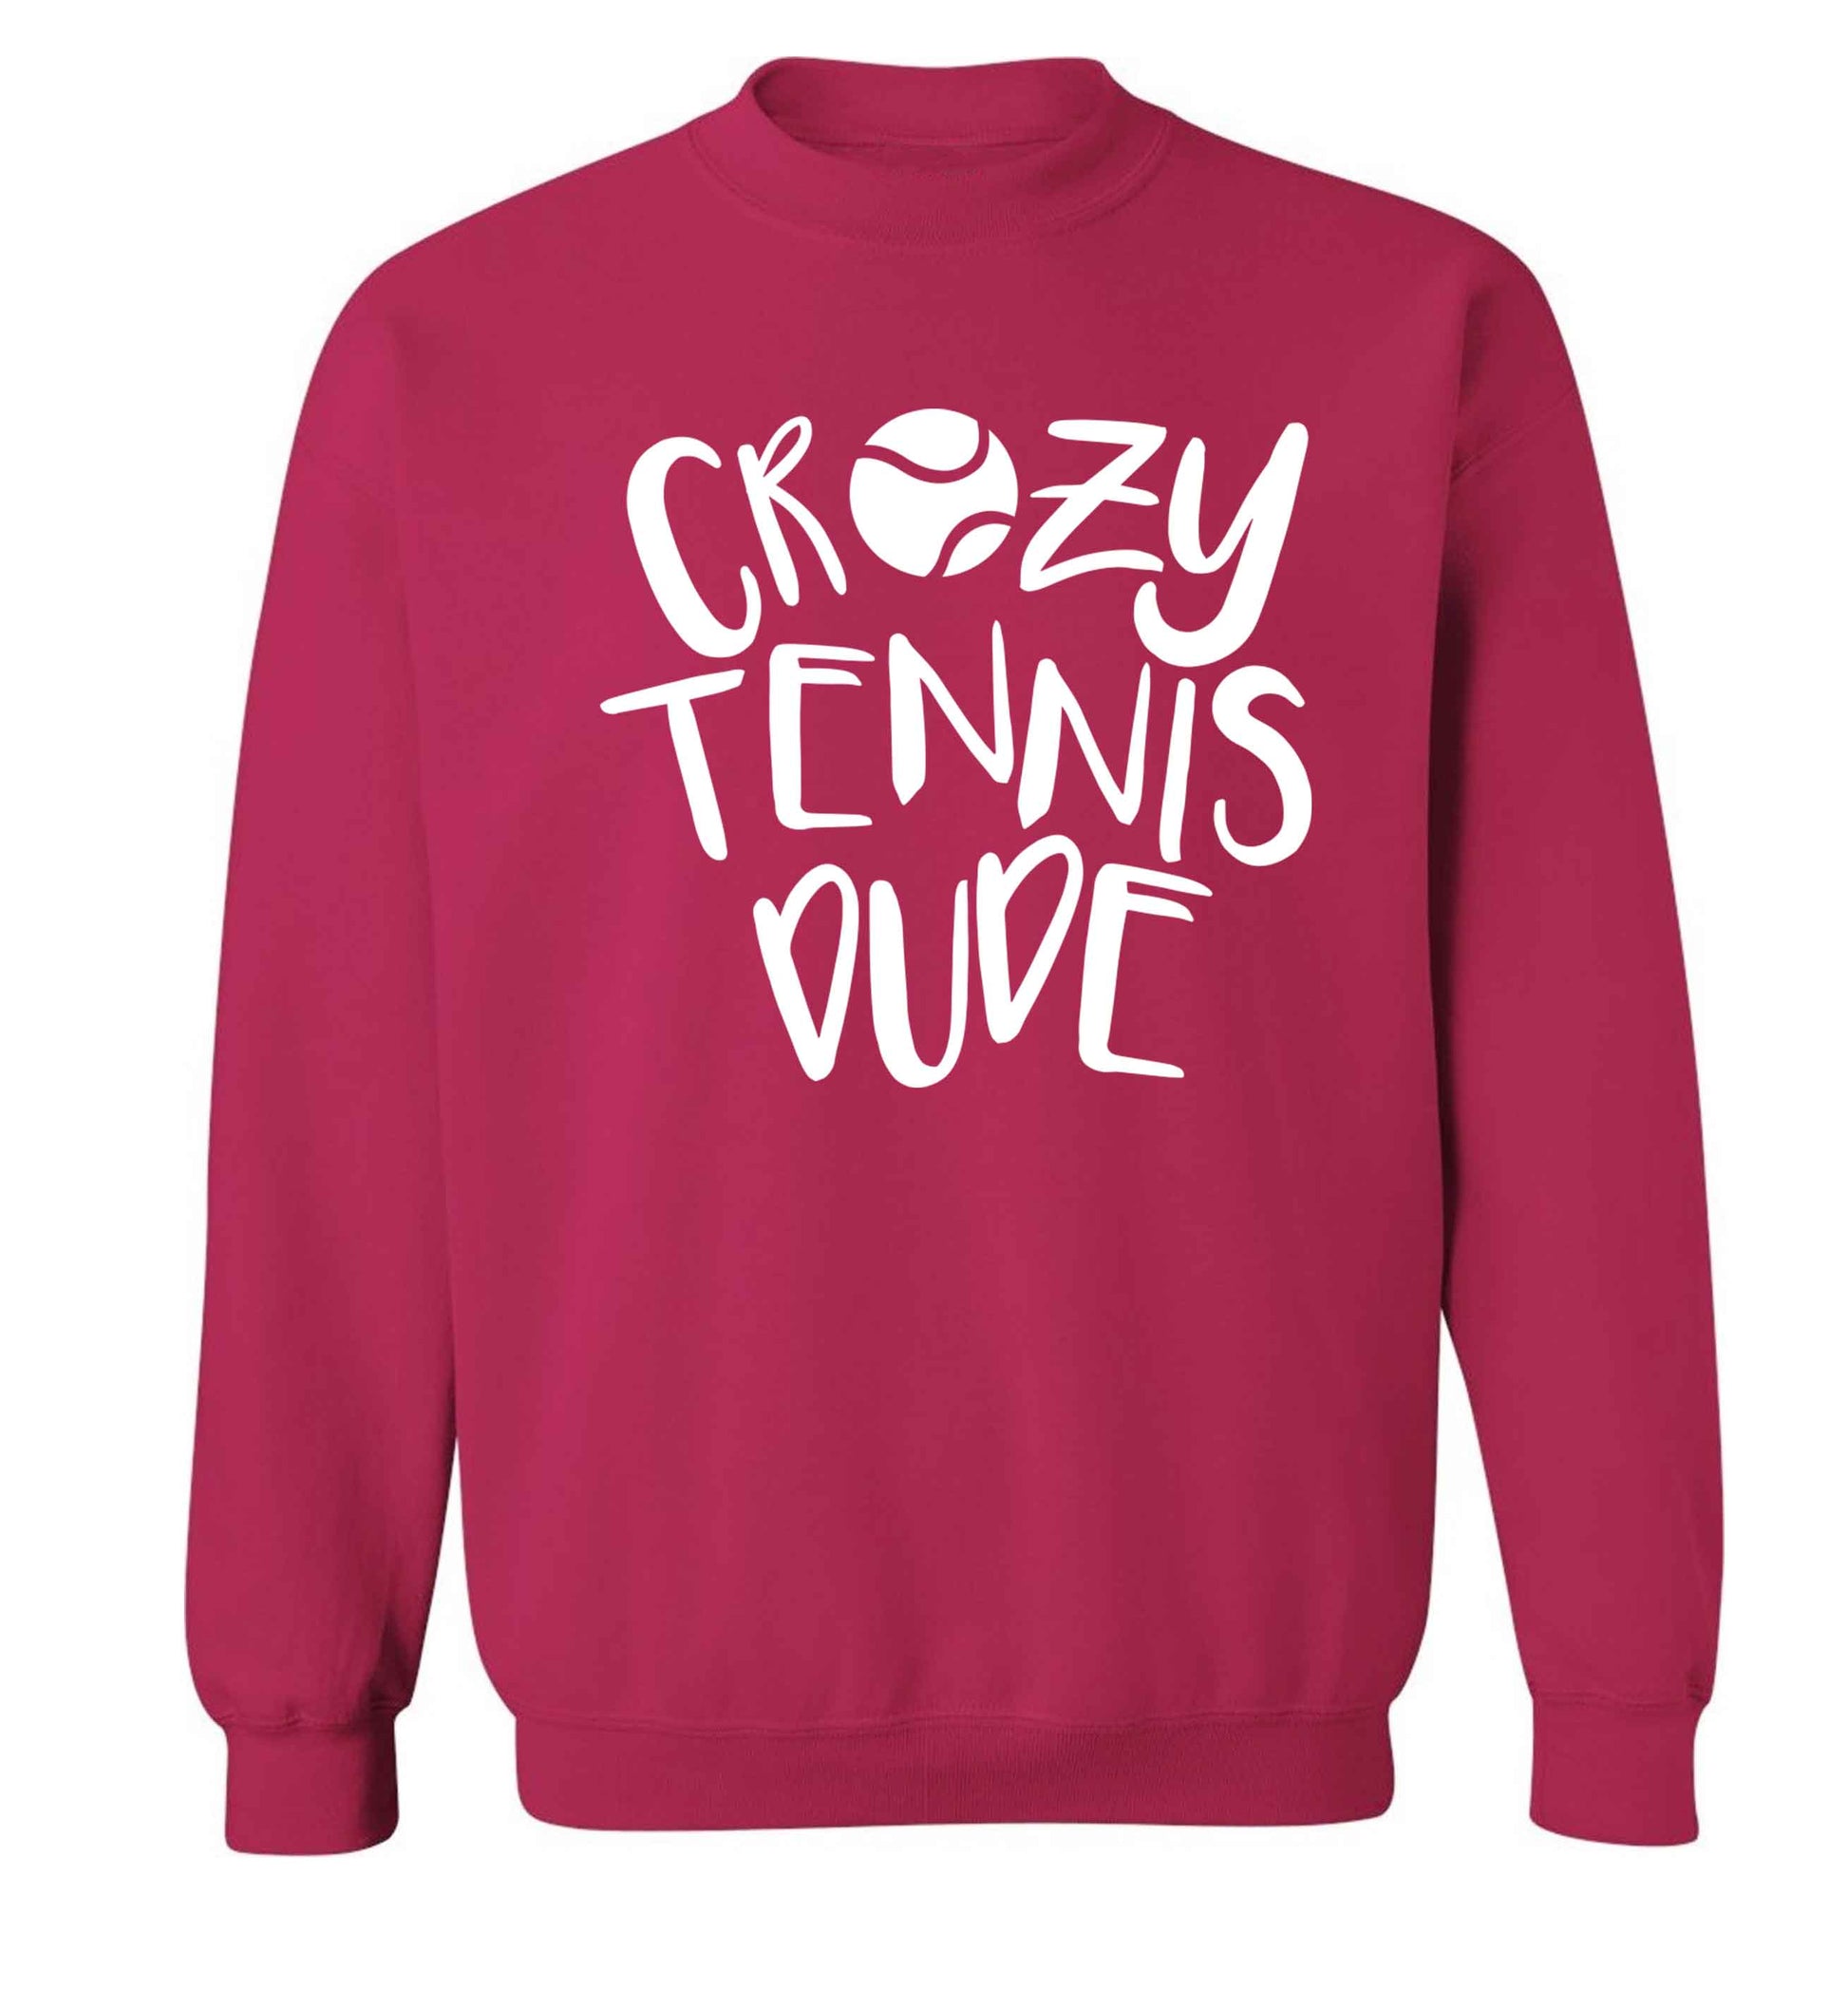 Crazy tennis dude Adult's unisex pink Sweater 2XL